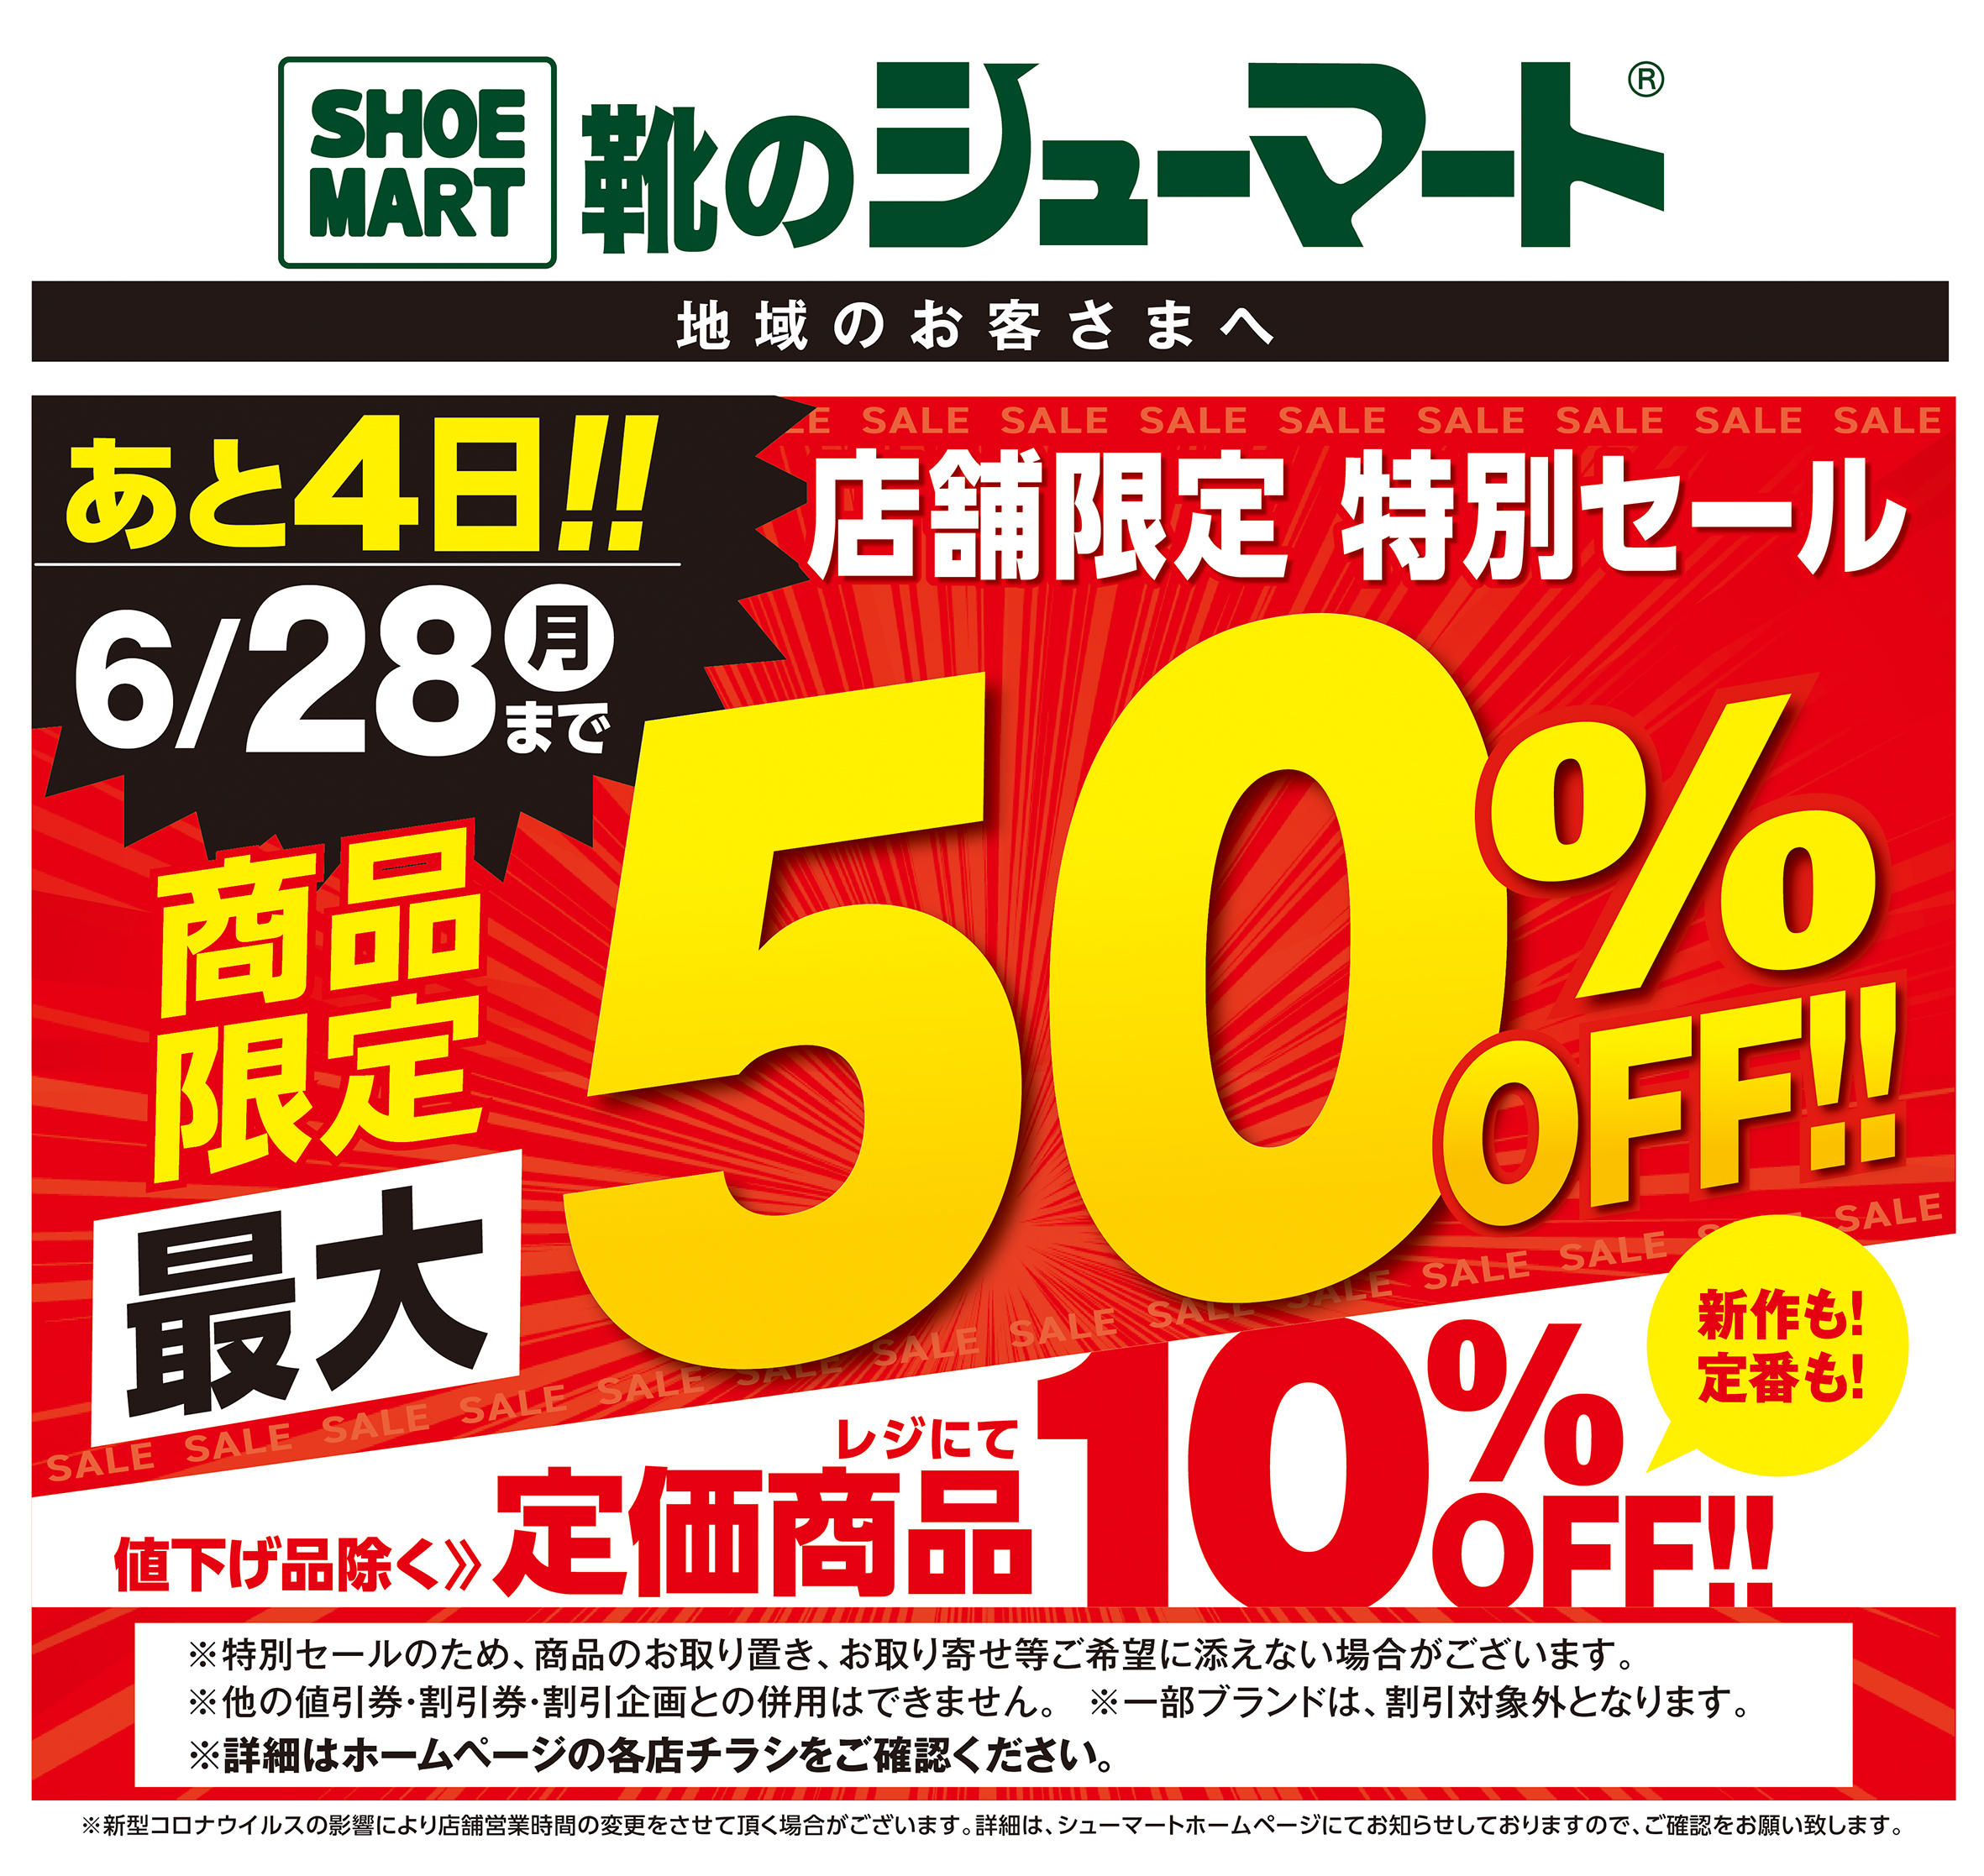 https://www.shoemart.co.jp/images/0625SALE_news.jpg